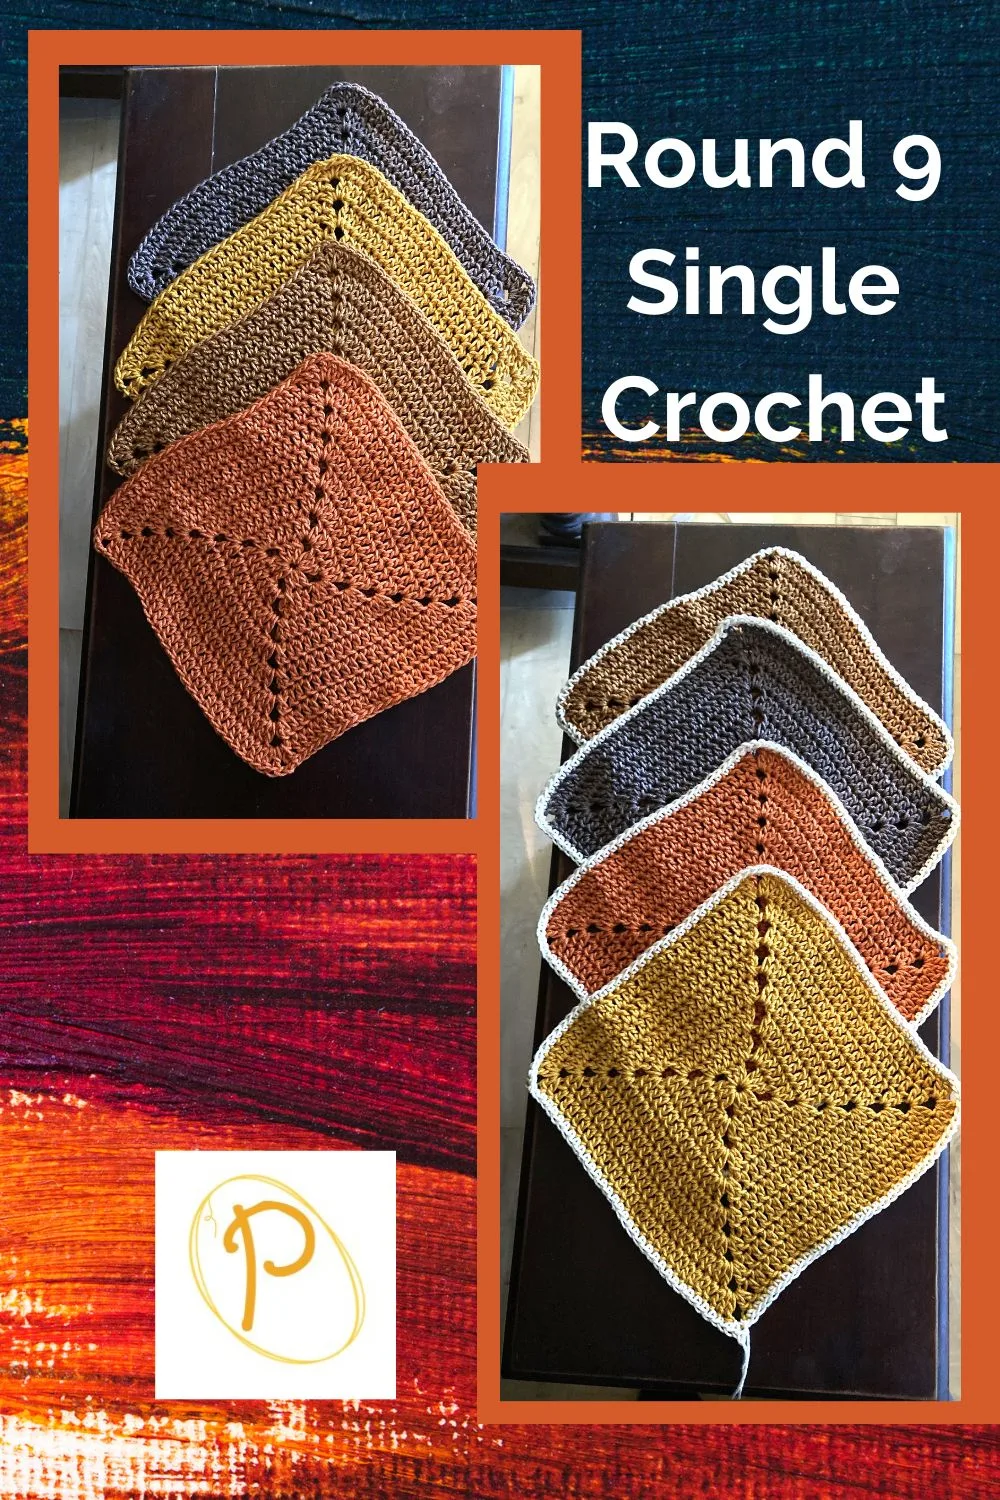 Round 9 Single Crochet